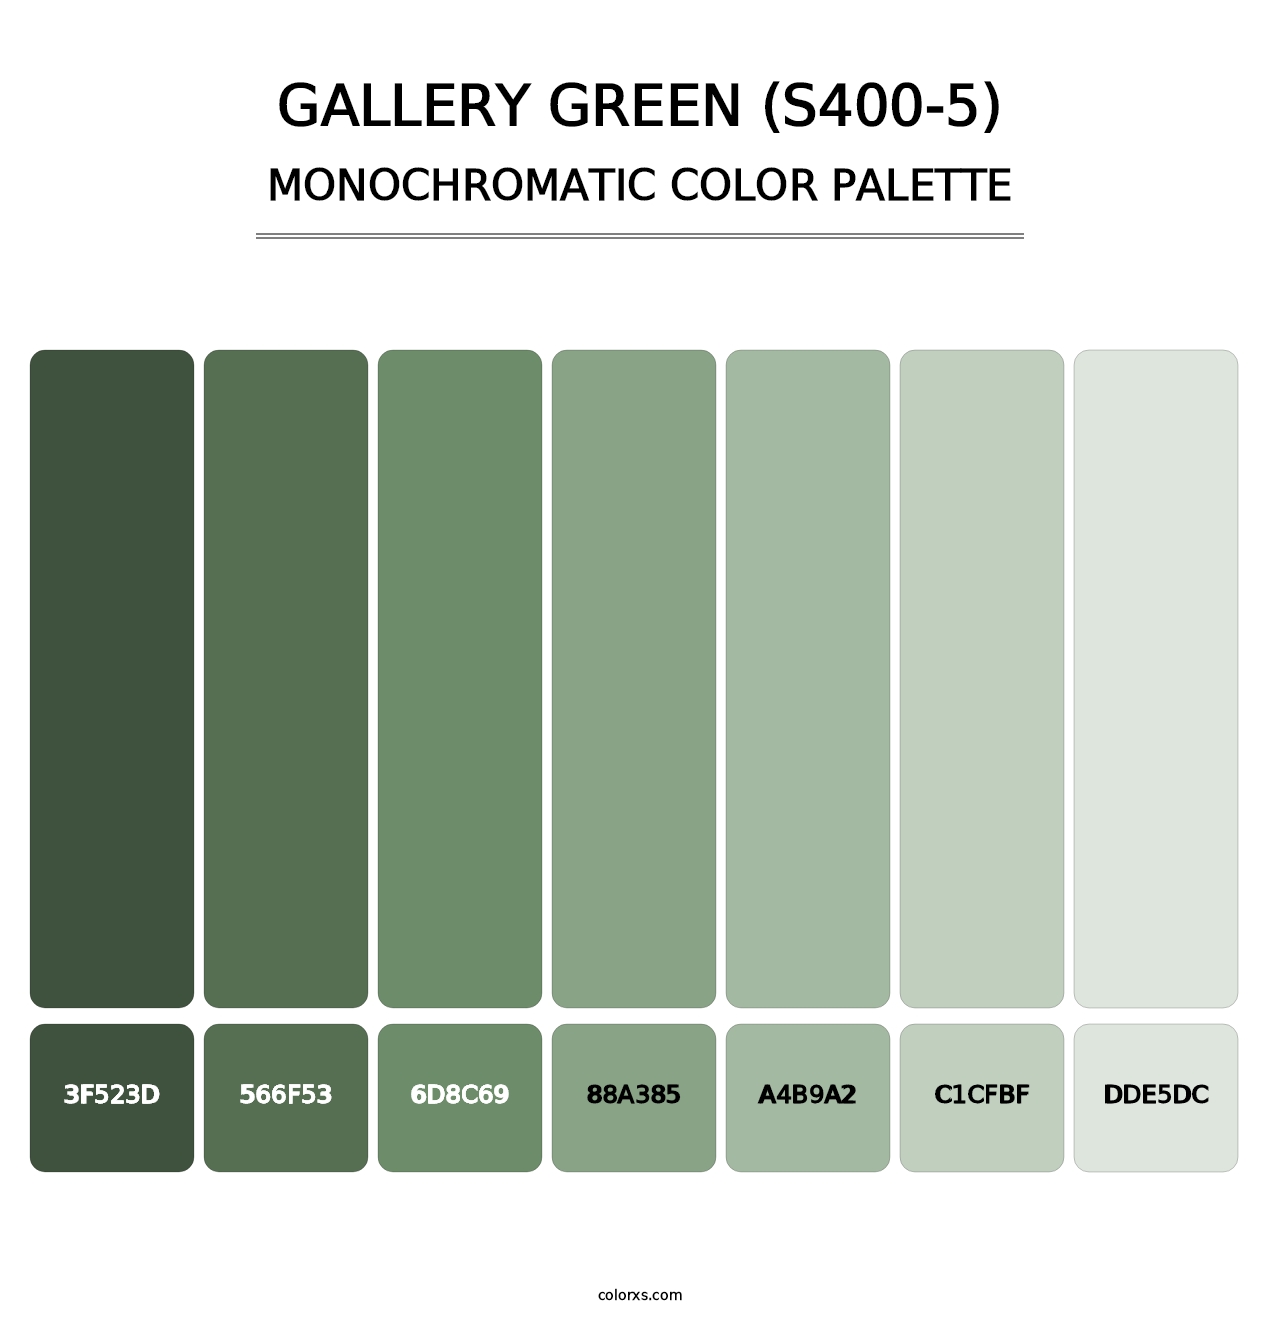 Gallery Green (S400-5) - Monochromatic Color Palette